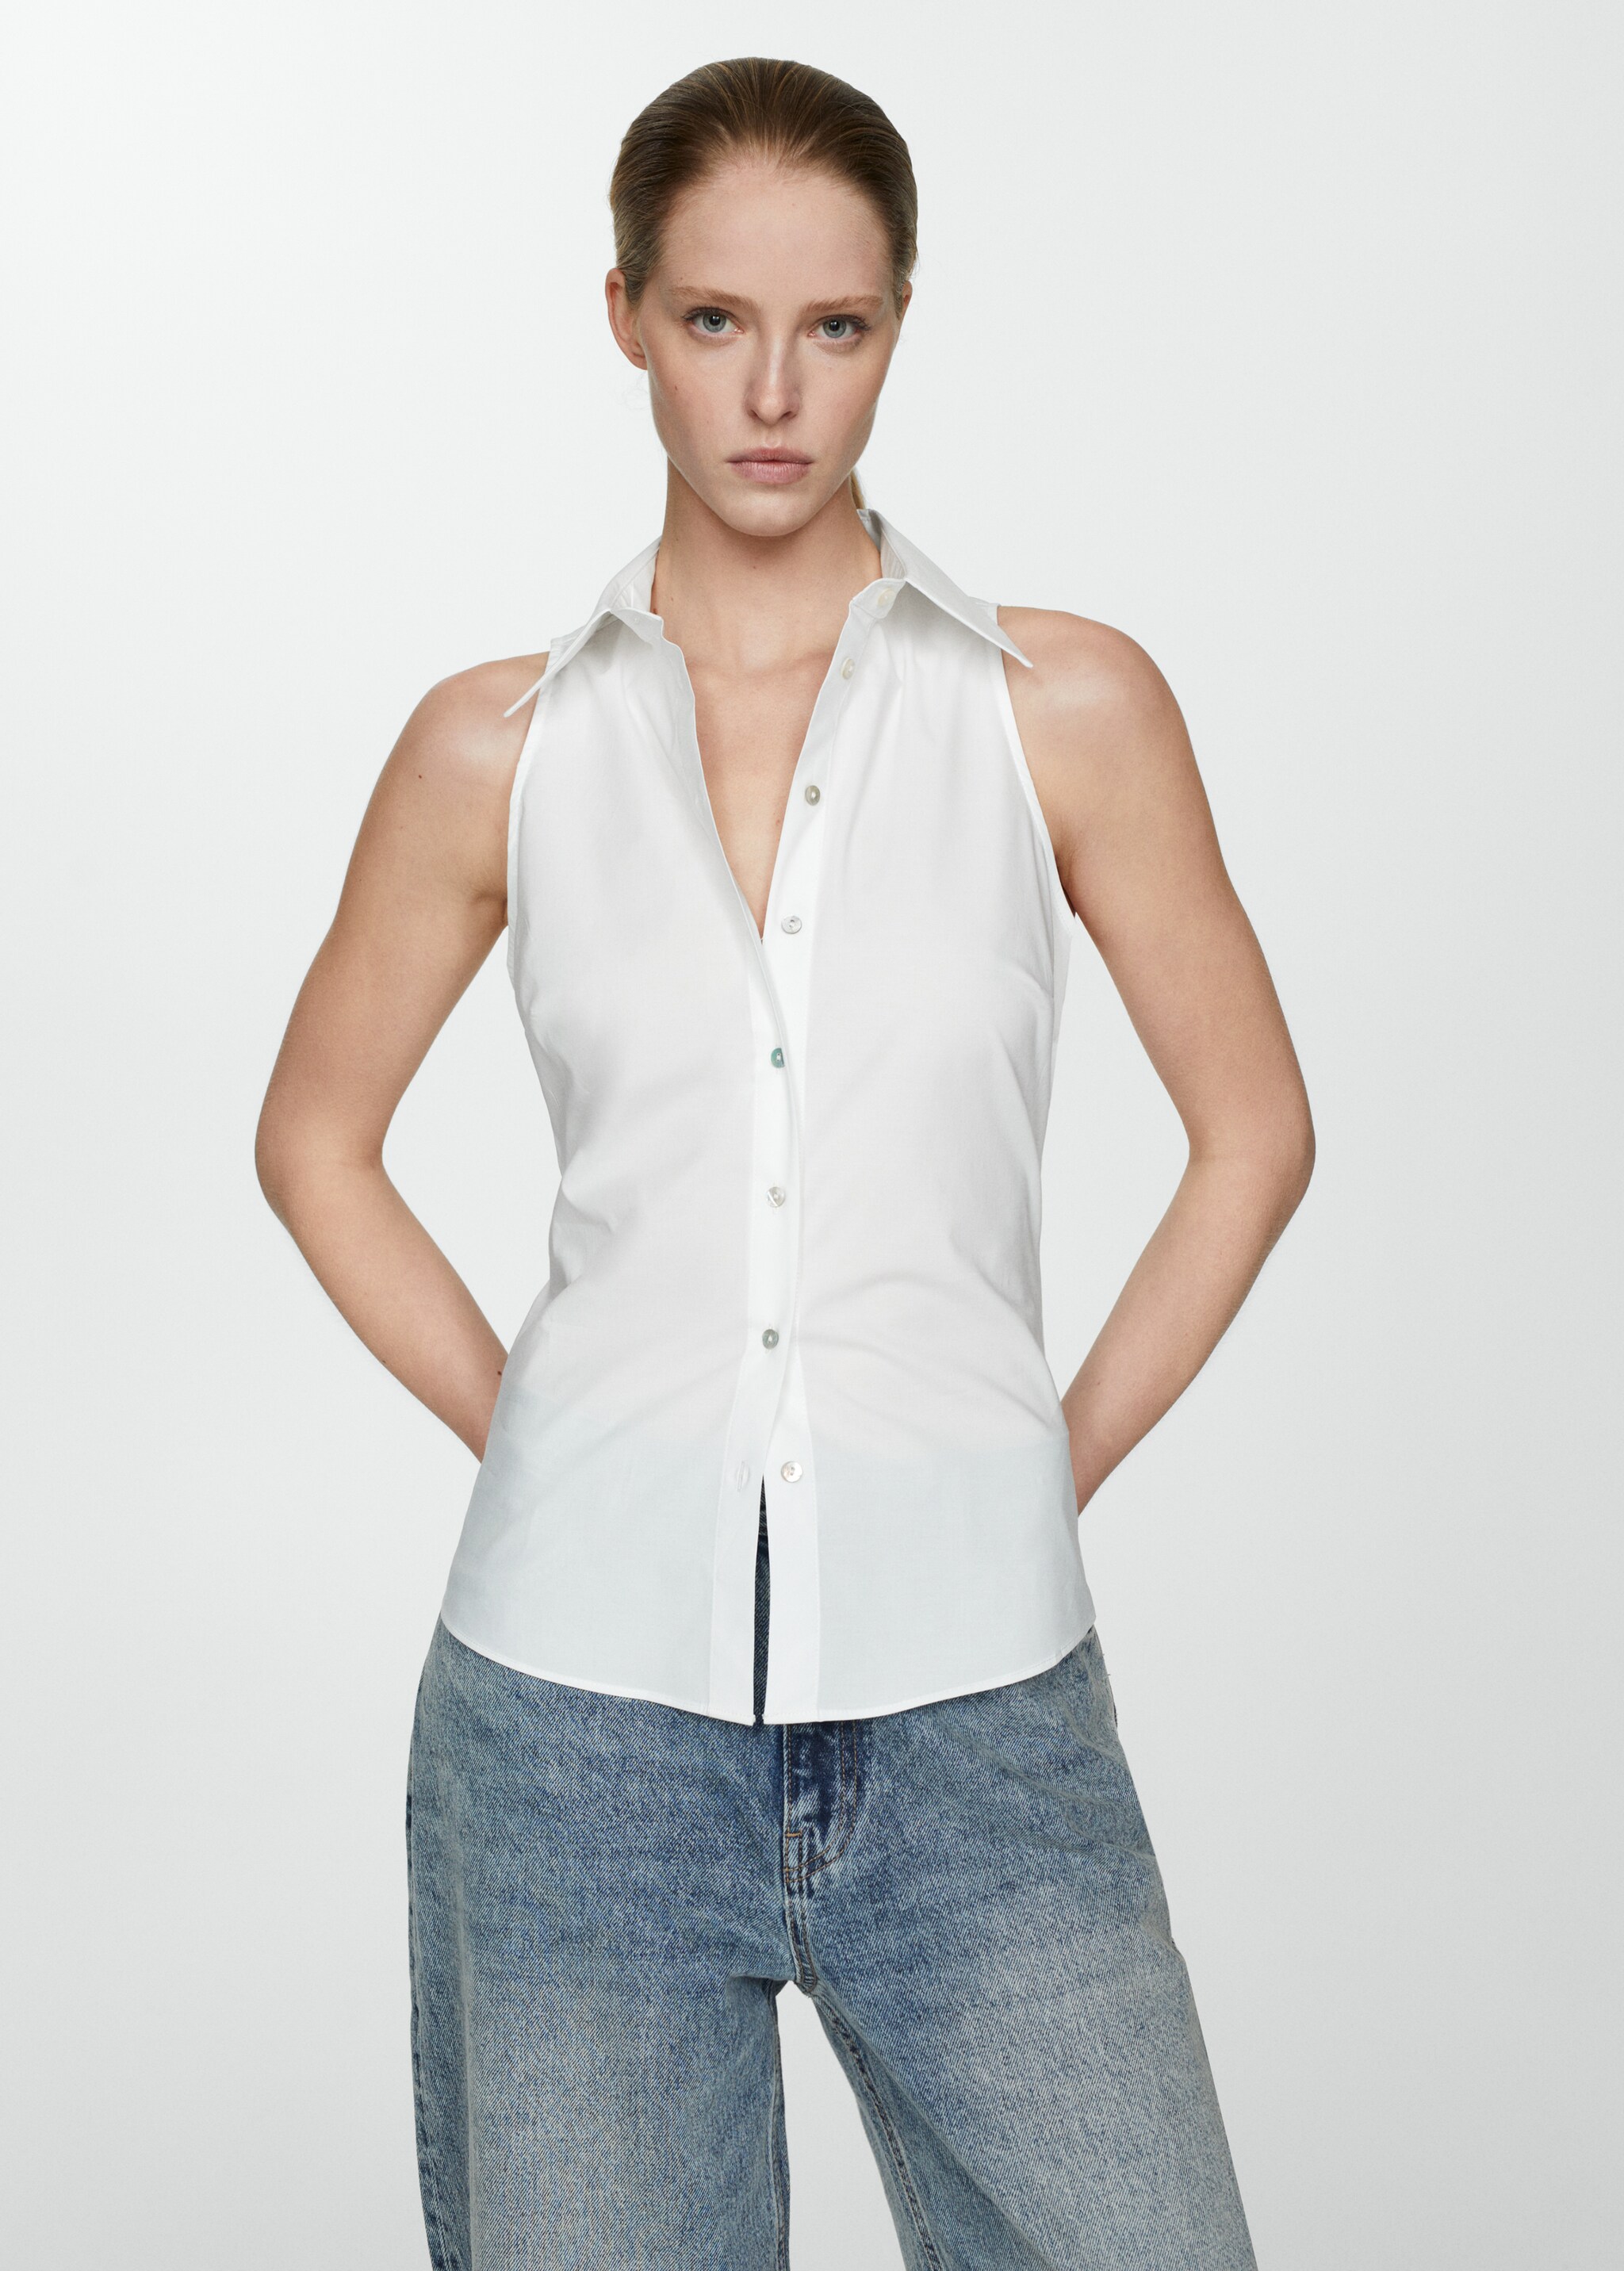 Sleeveless cotton shirt - Medium plane